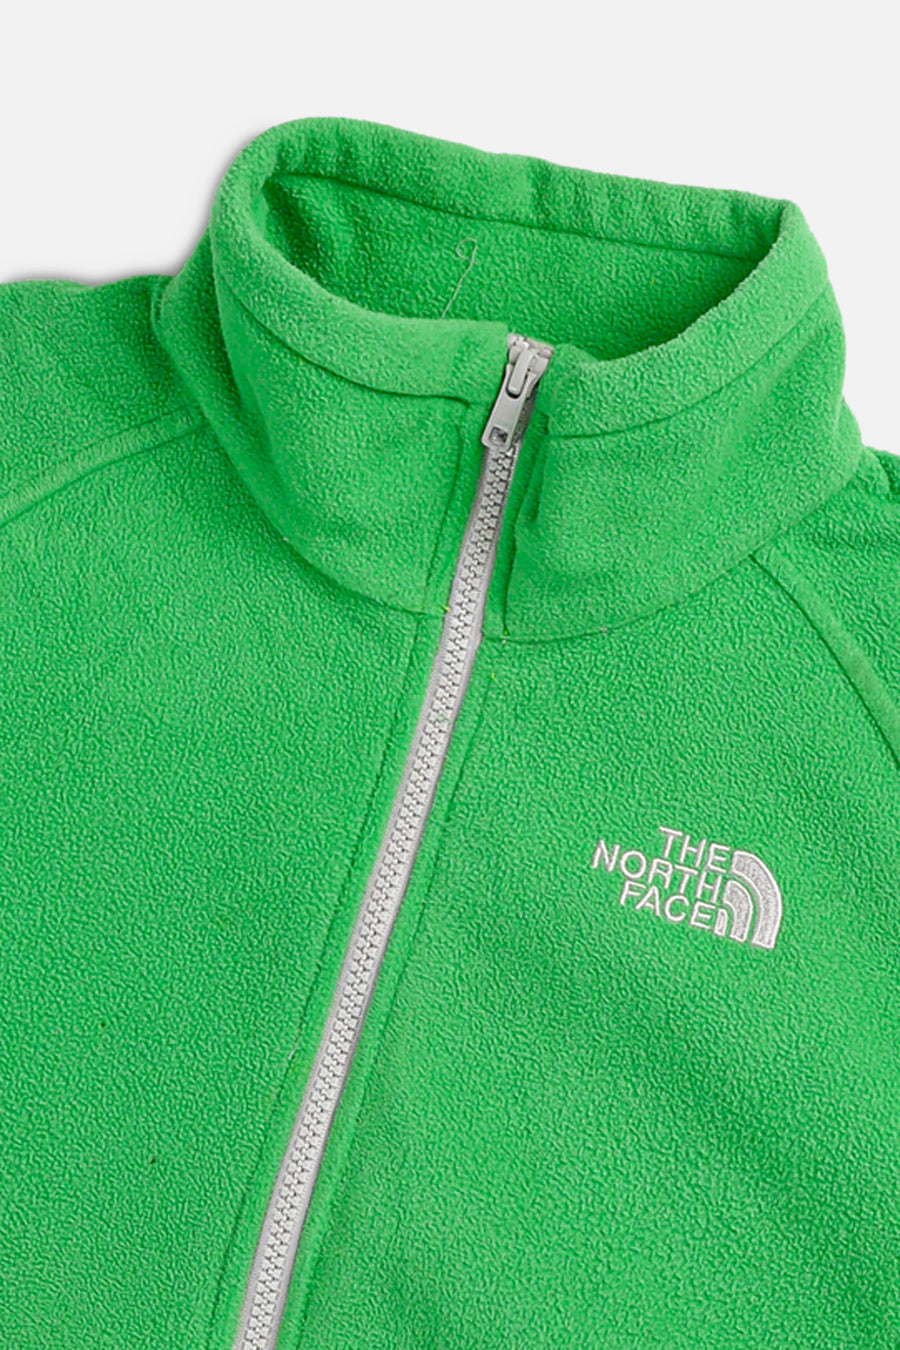 Rework North Face Crop Fleece Jacket - S